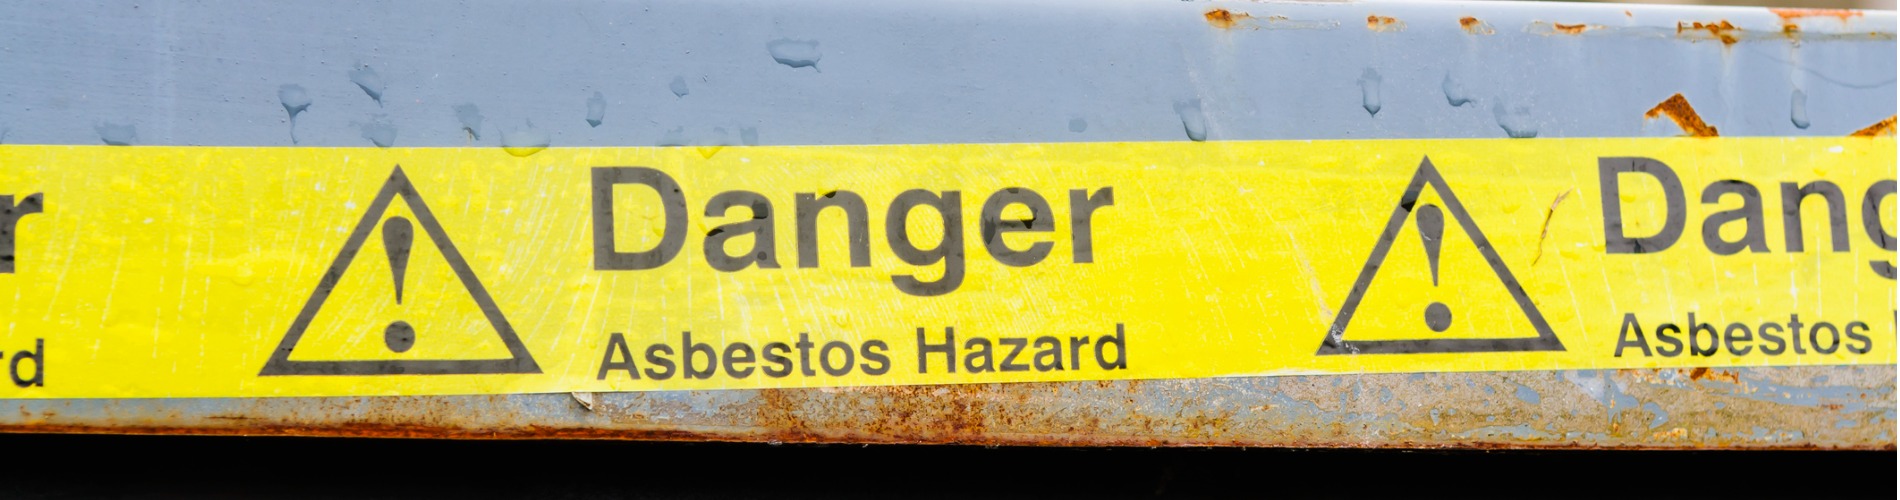 warning-tape-across-a-bin-at-an-asbestos-clean-up.jpg-1900x500